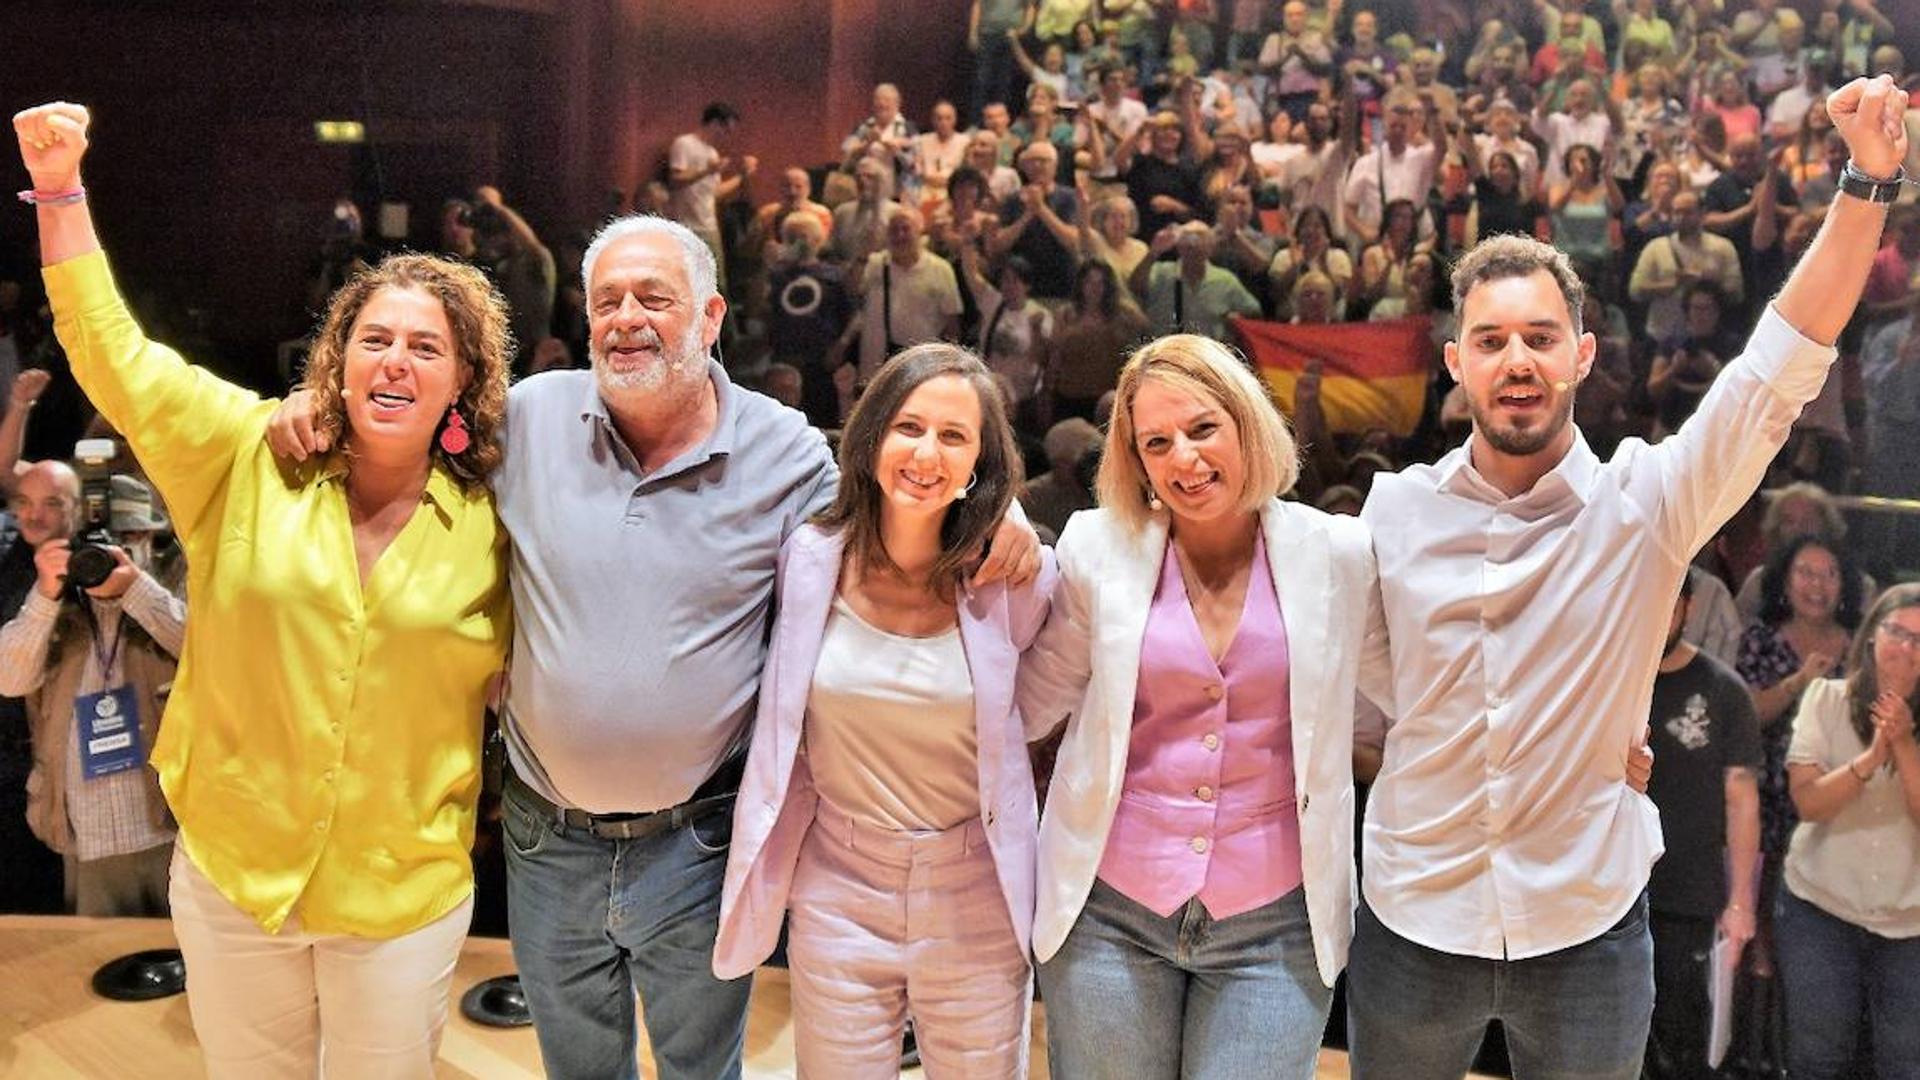 DIRECT |  Sí Podemos presents its candidates